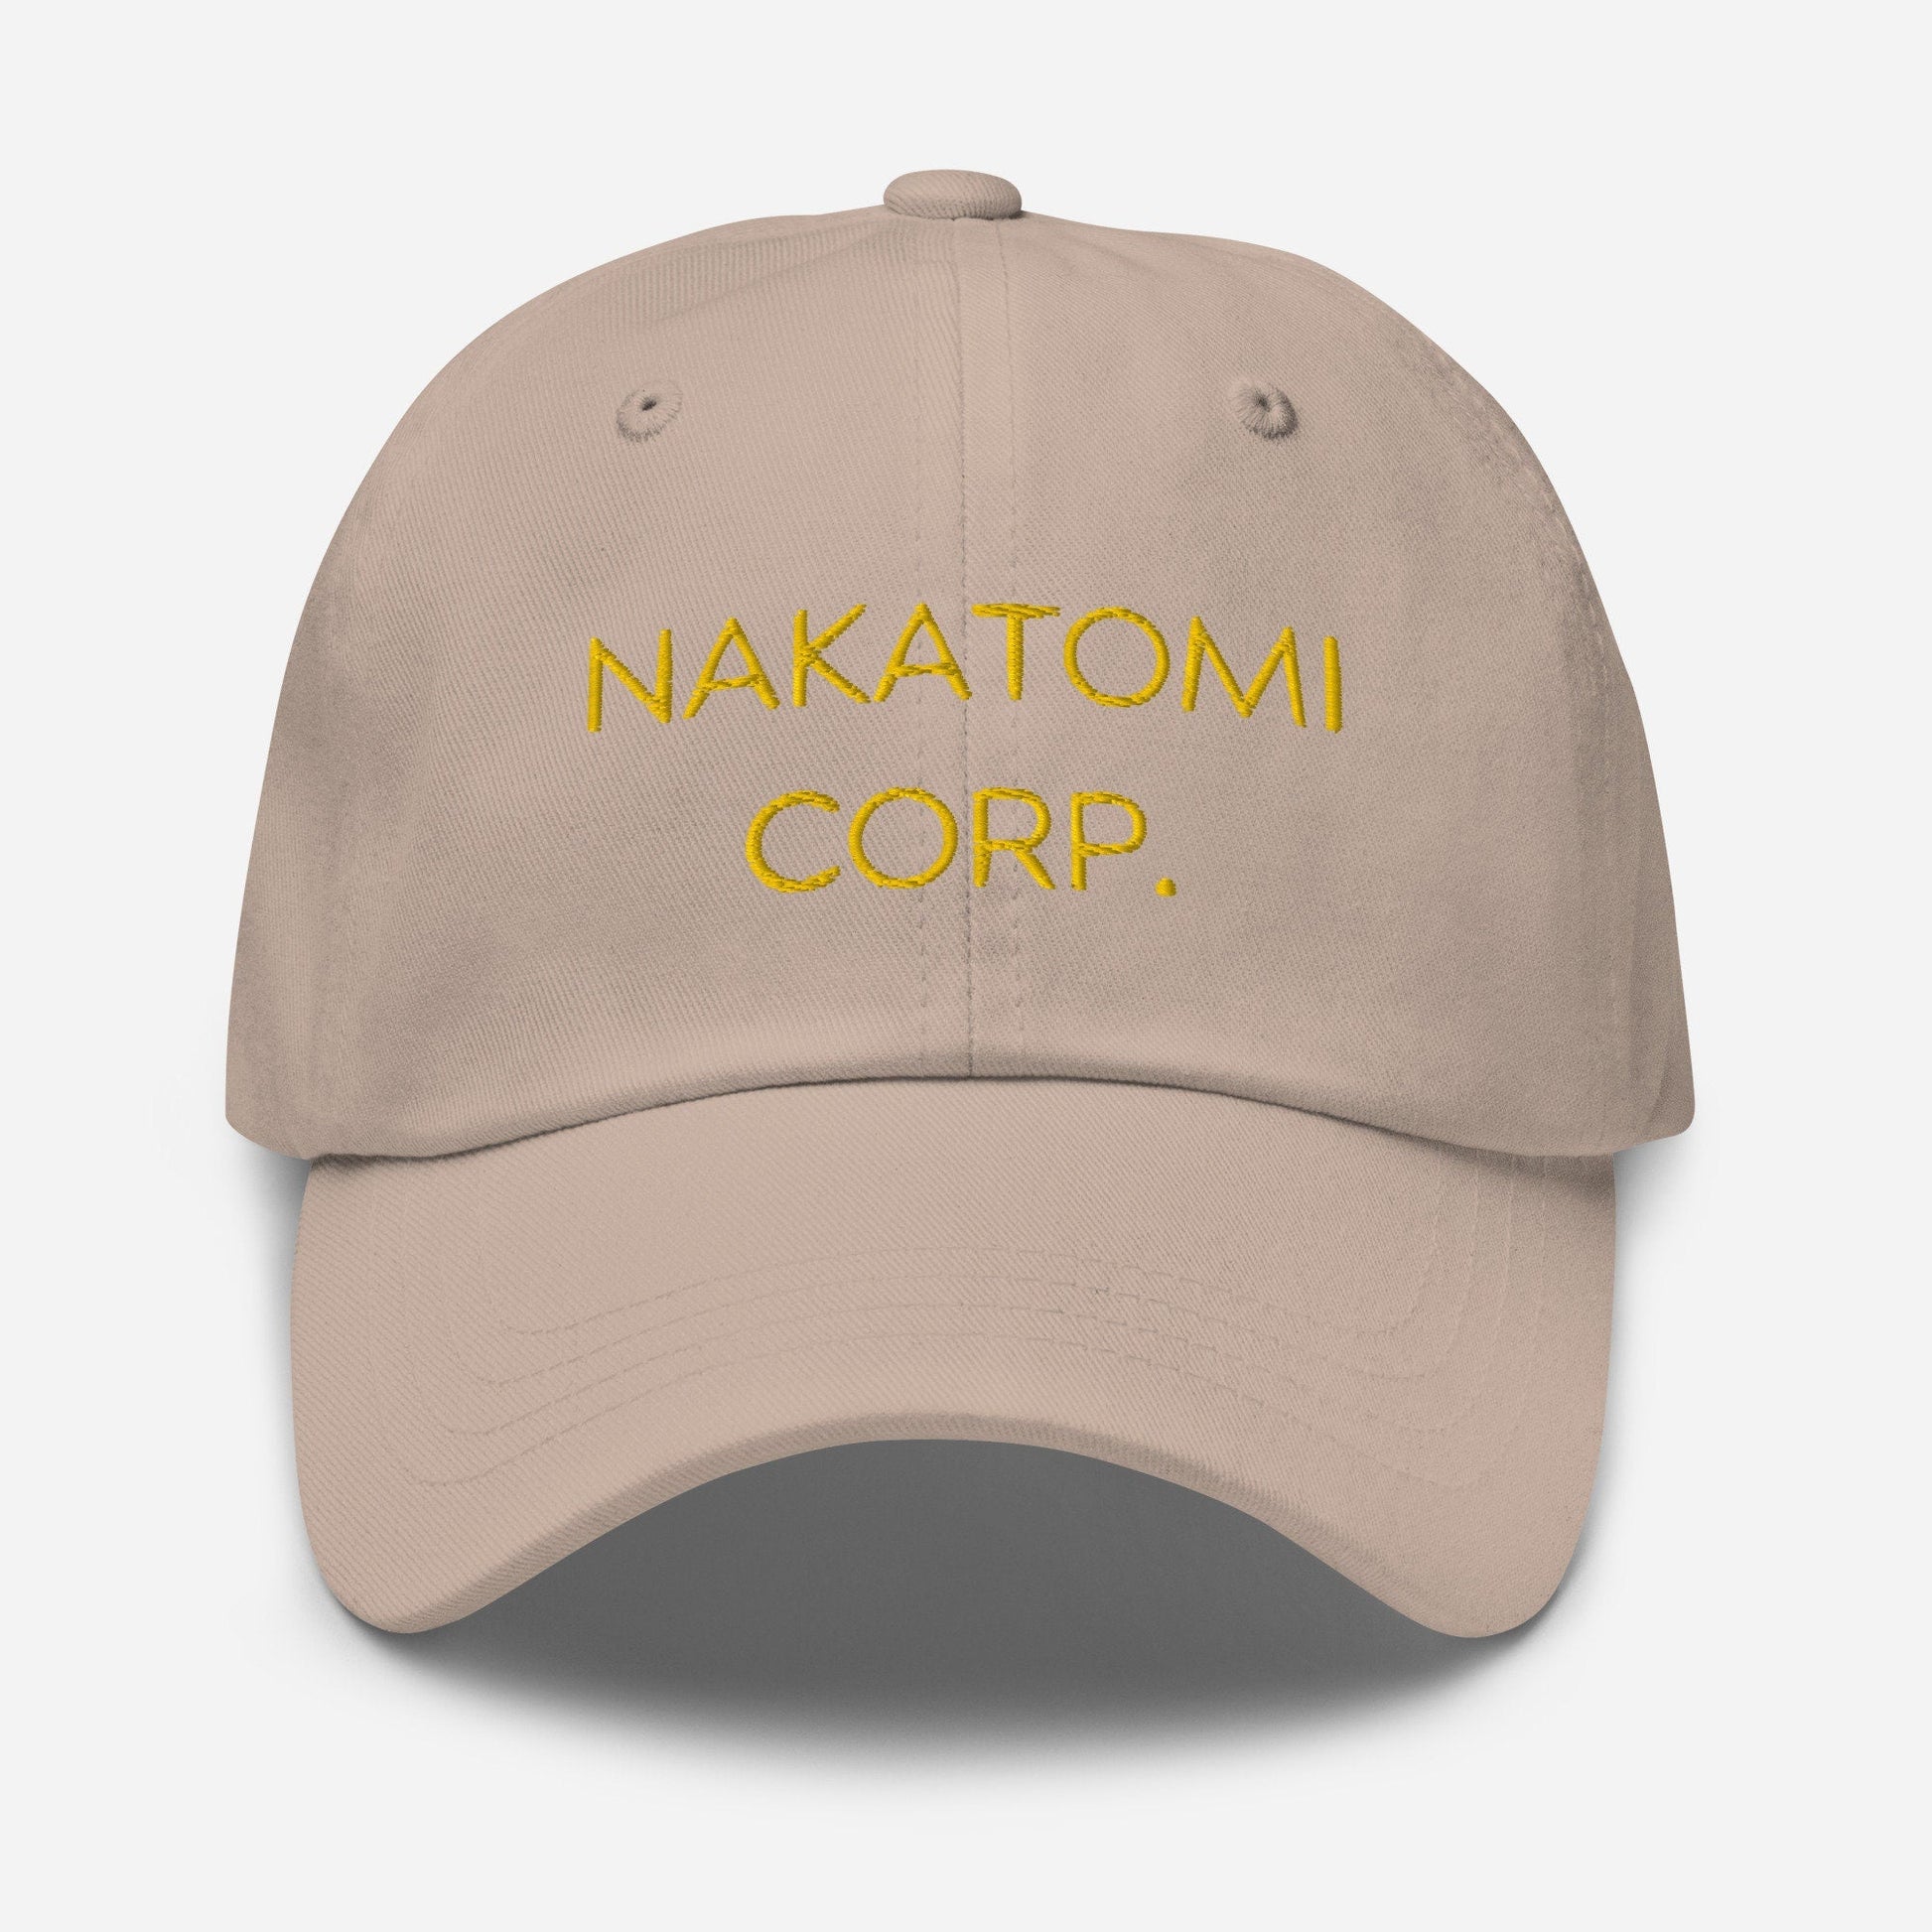 Die Hard Dad Hat - Nakatomi Plaza - Embroidered Cotton Cap for Movie Fans - Evilwater Originals